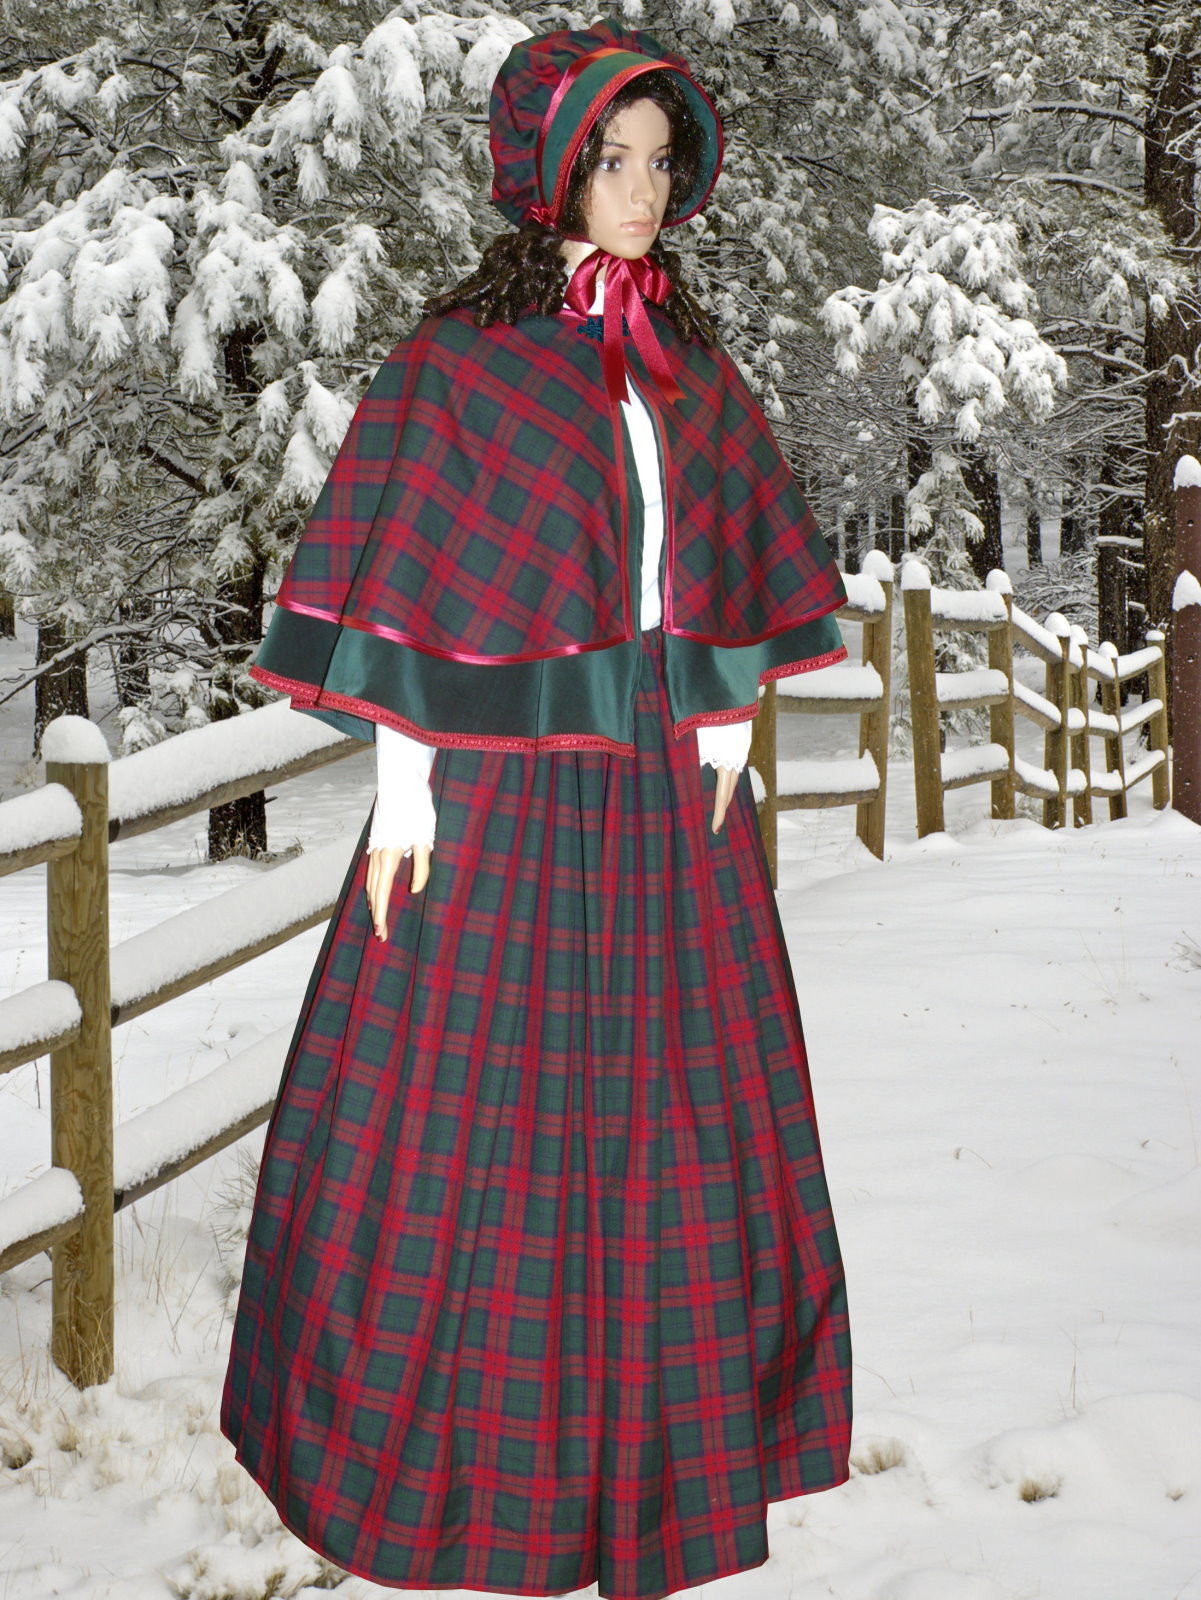 Ladies Vctorian Carol Singer School Mistress Costume and Bonnet Size 6 - 10  Image